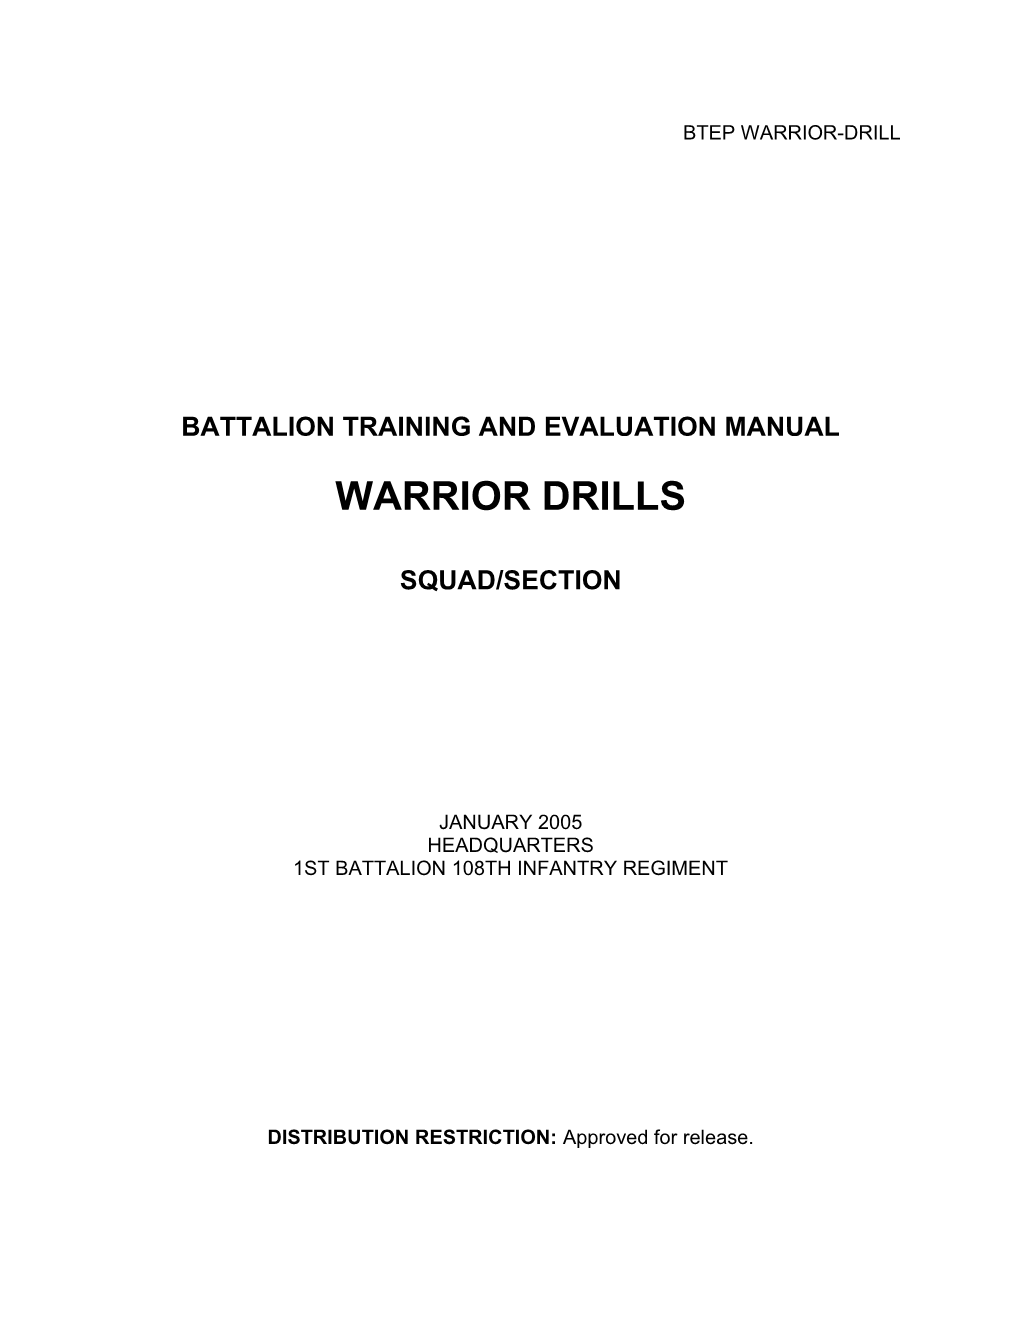 Battalion Training and Evaluation Manual